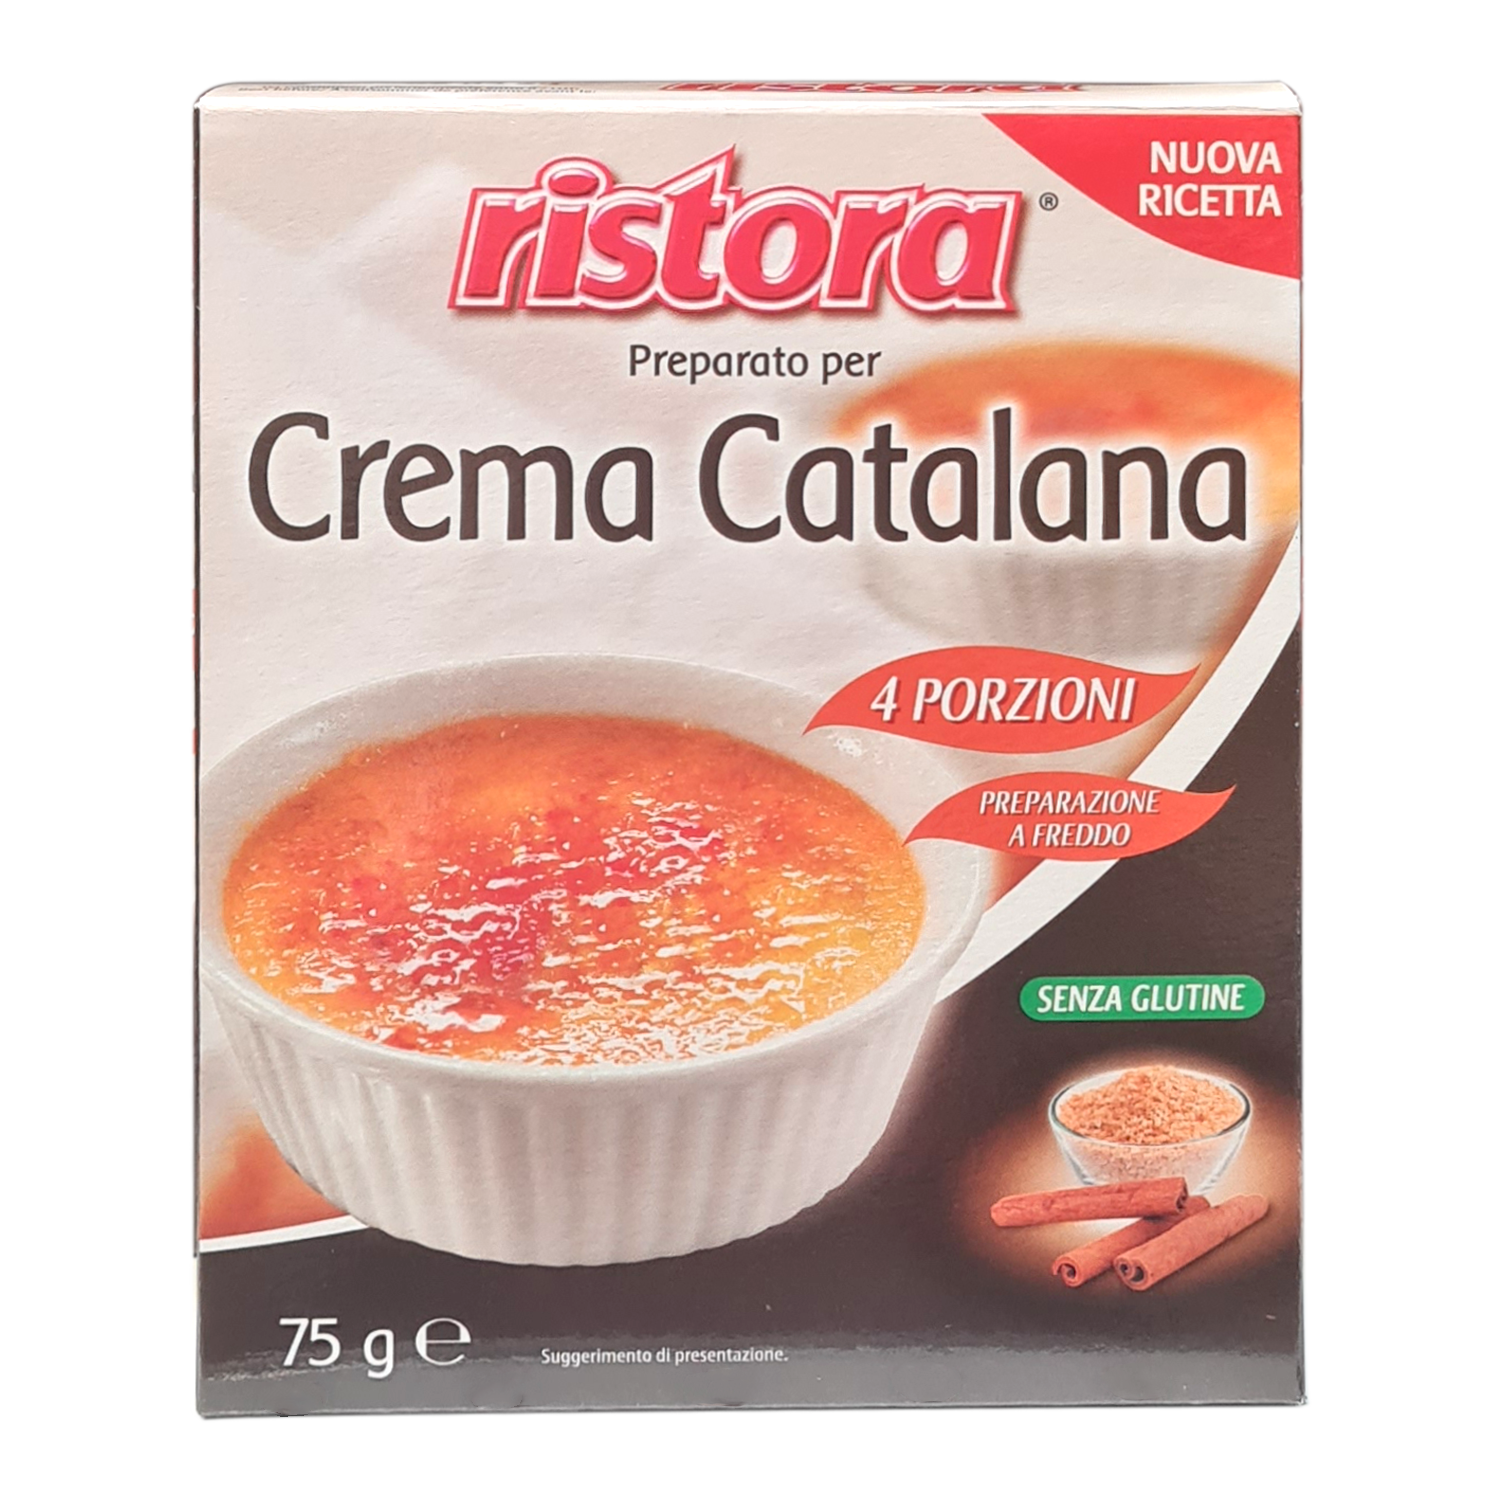 Crema Catalana 1 Busta Astuccio 75g Ristora